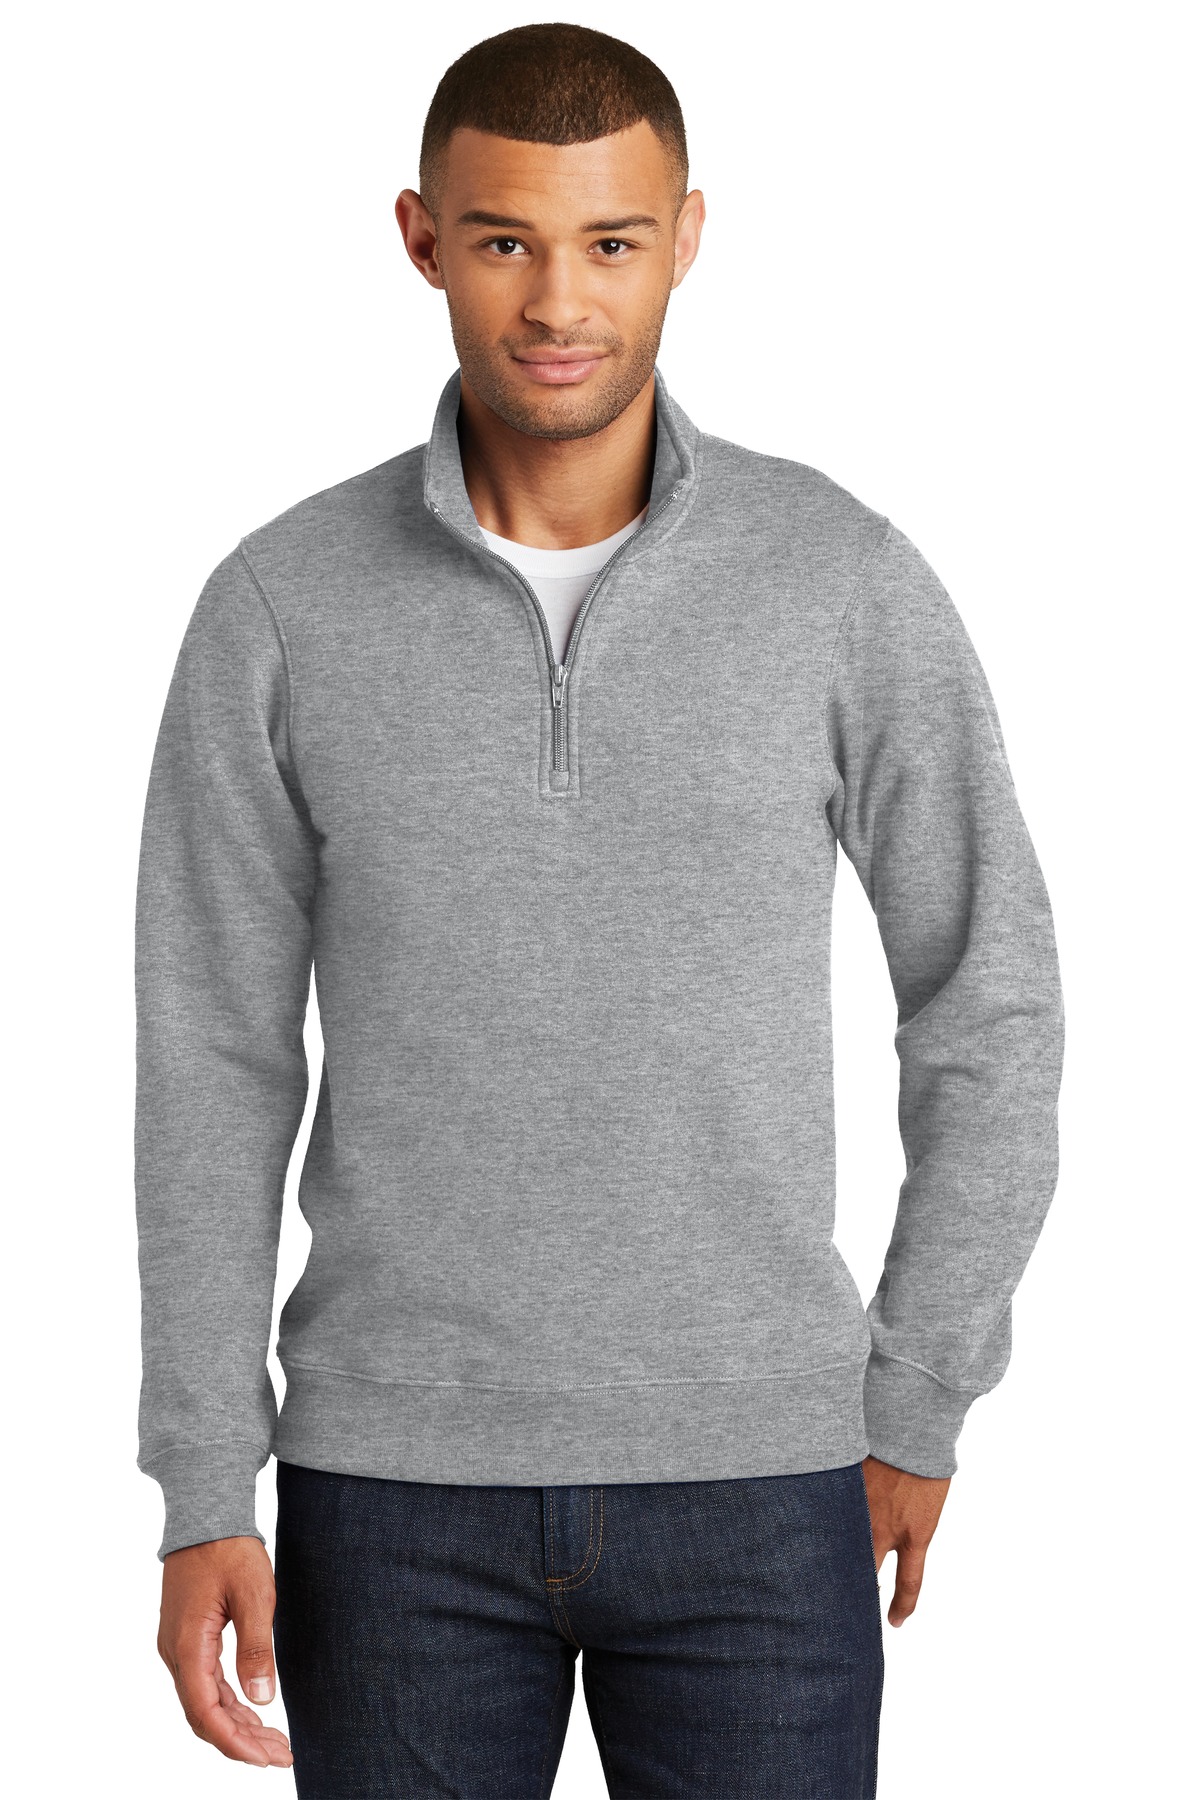 Port & Company Hospitality Sweatshirts & Fleece Fan Favorite Fleece 1/4-Zip Pullover Sweatshirt.-Port & Company